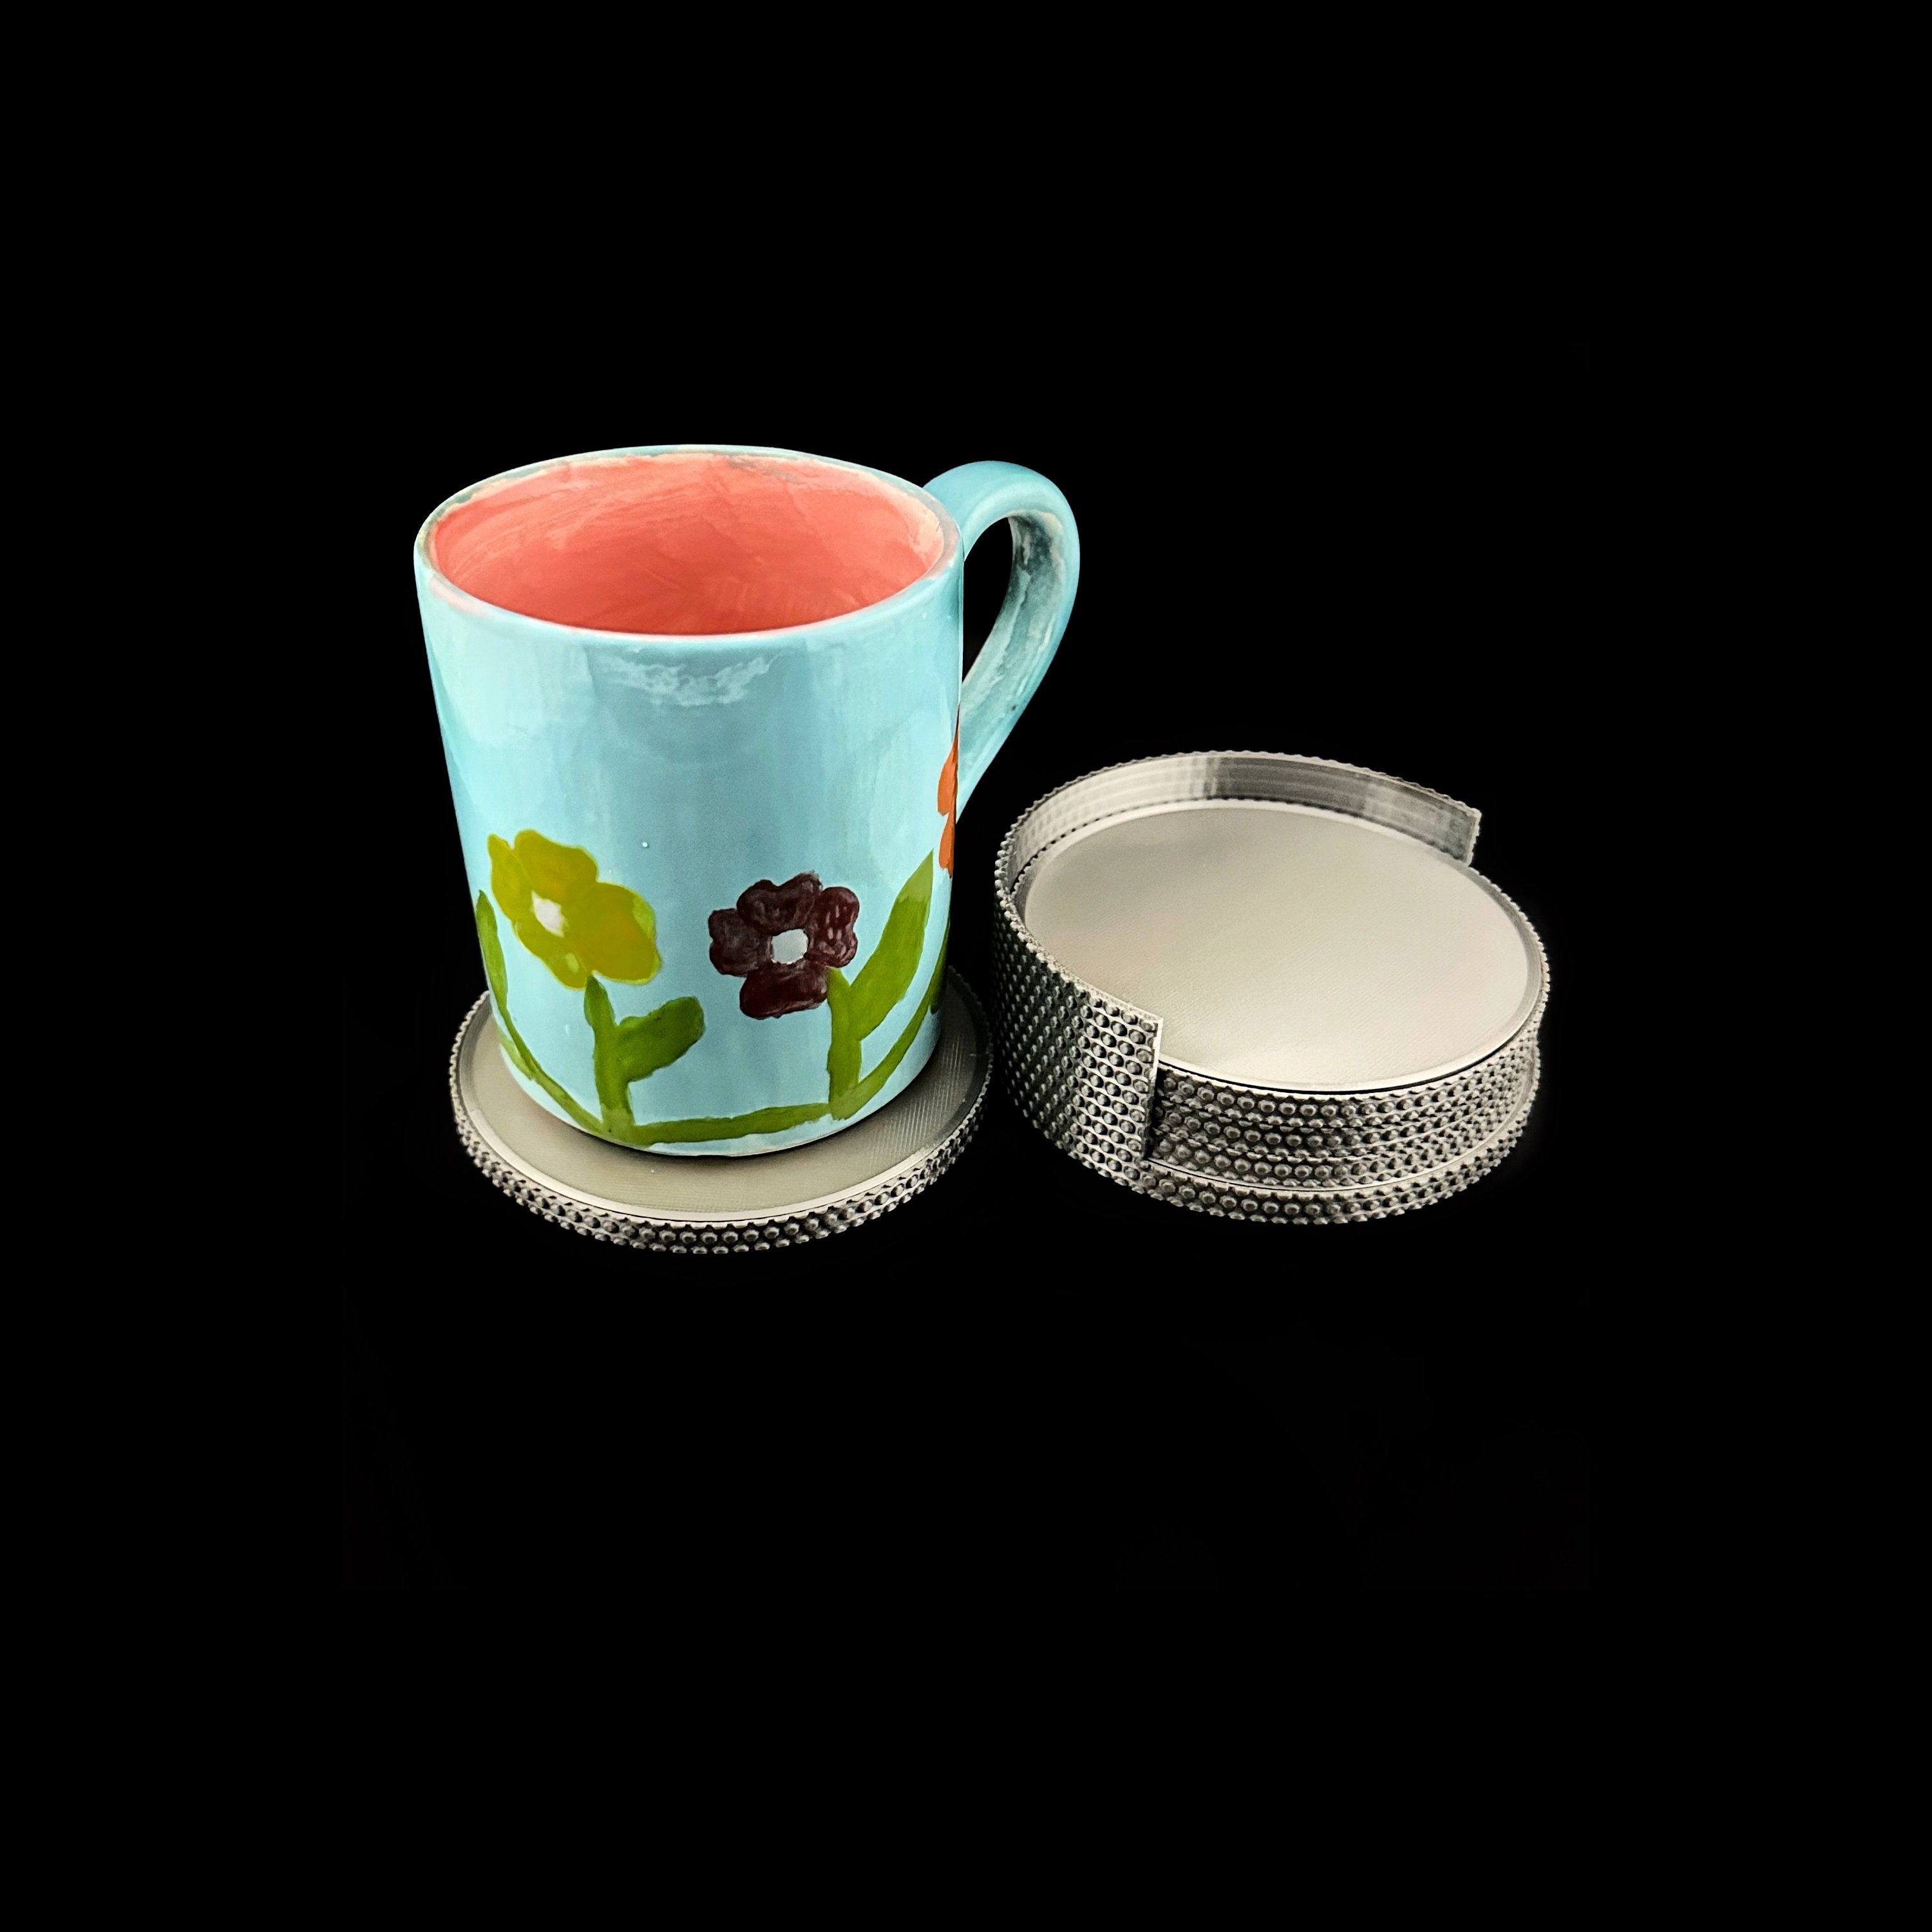 Fidget spinner black denim photocollage Coffee Mug by Denima Heart